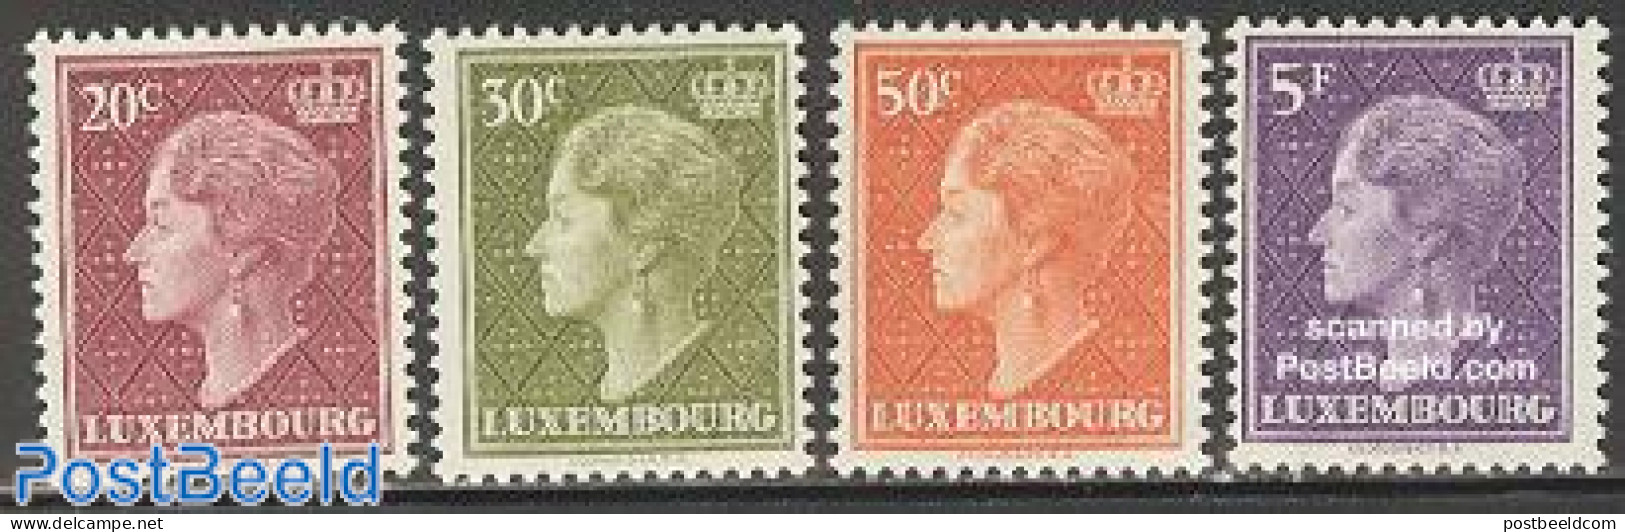 Luxemburg 1958 Definitives 4v, Mint NH - Neufs